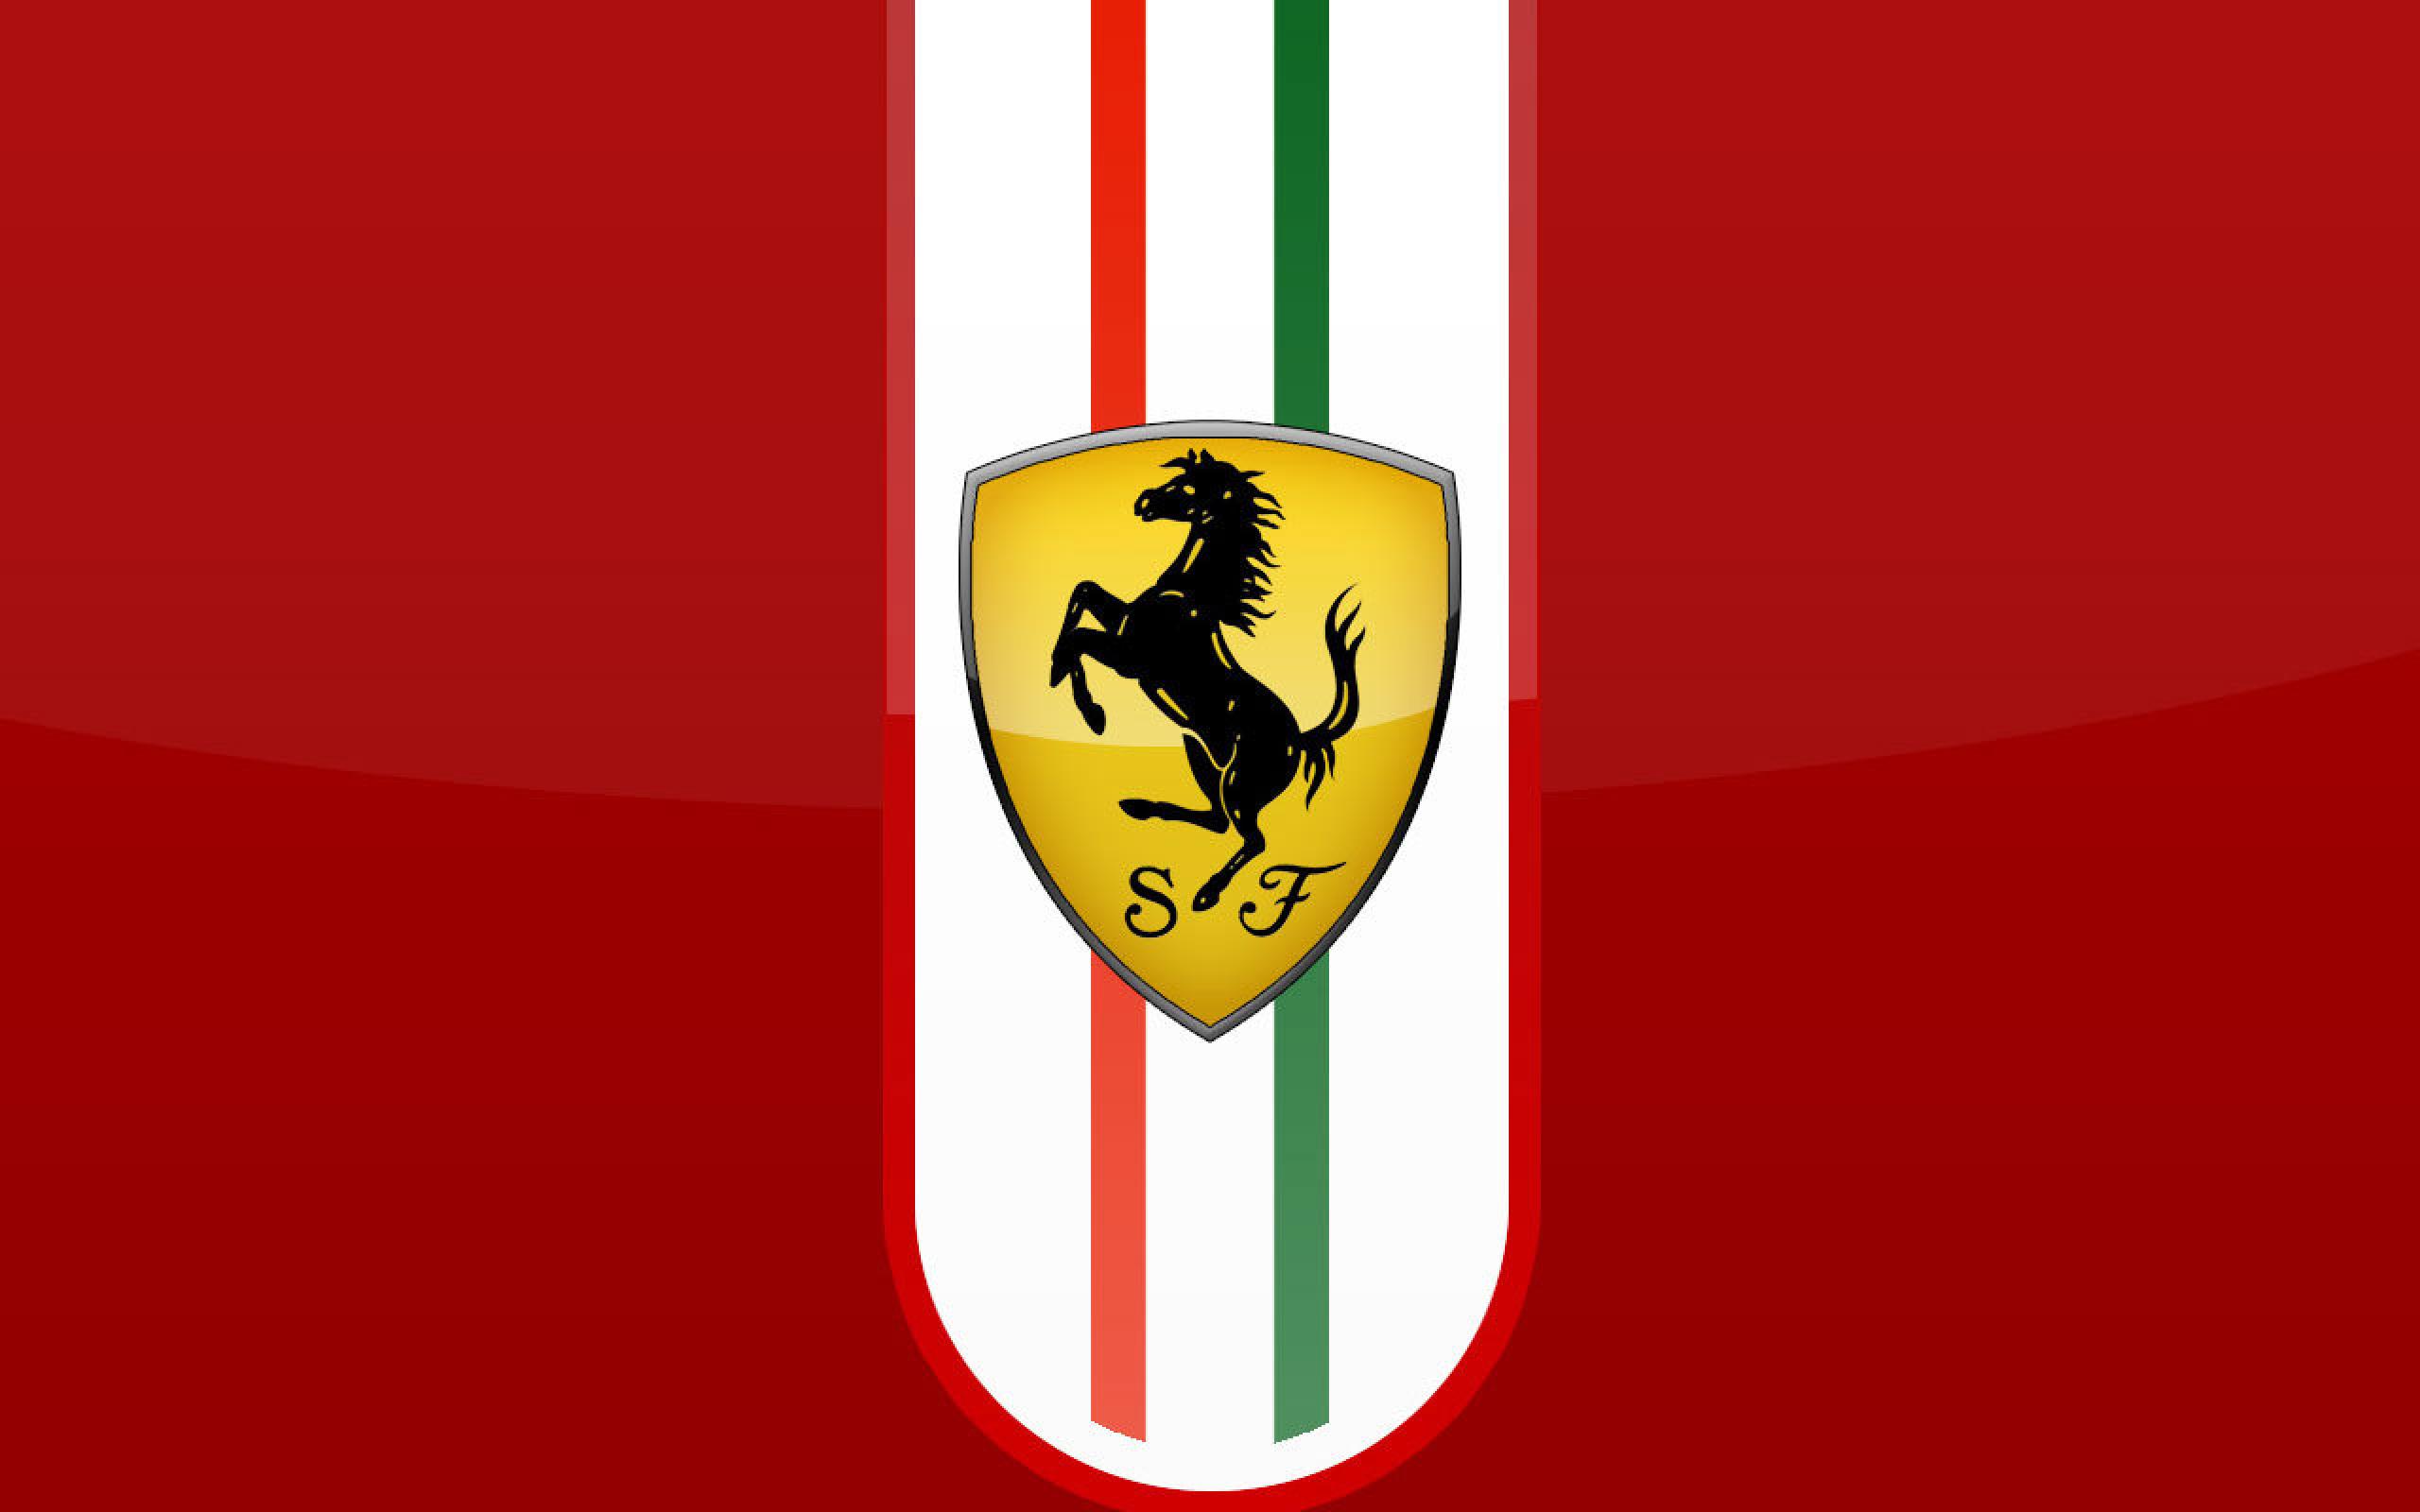 Ferrari Logo Wallpaper Background 58913 2560x1600 px